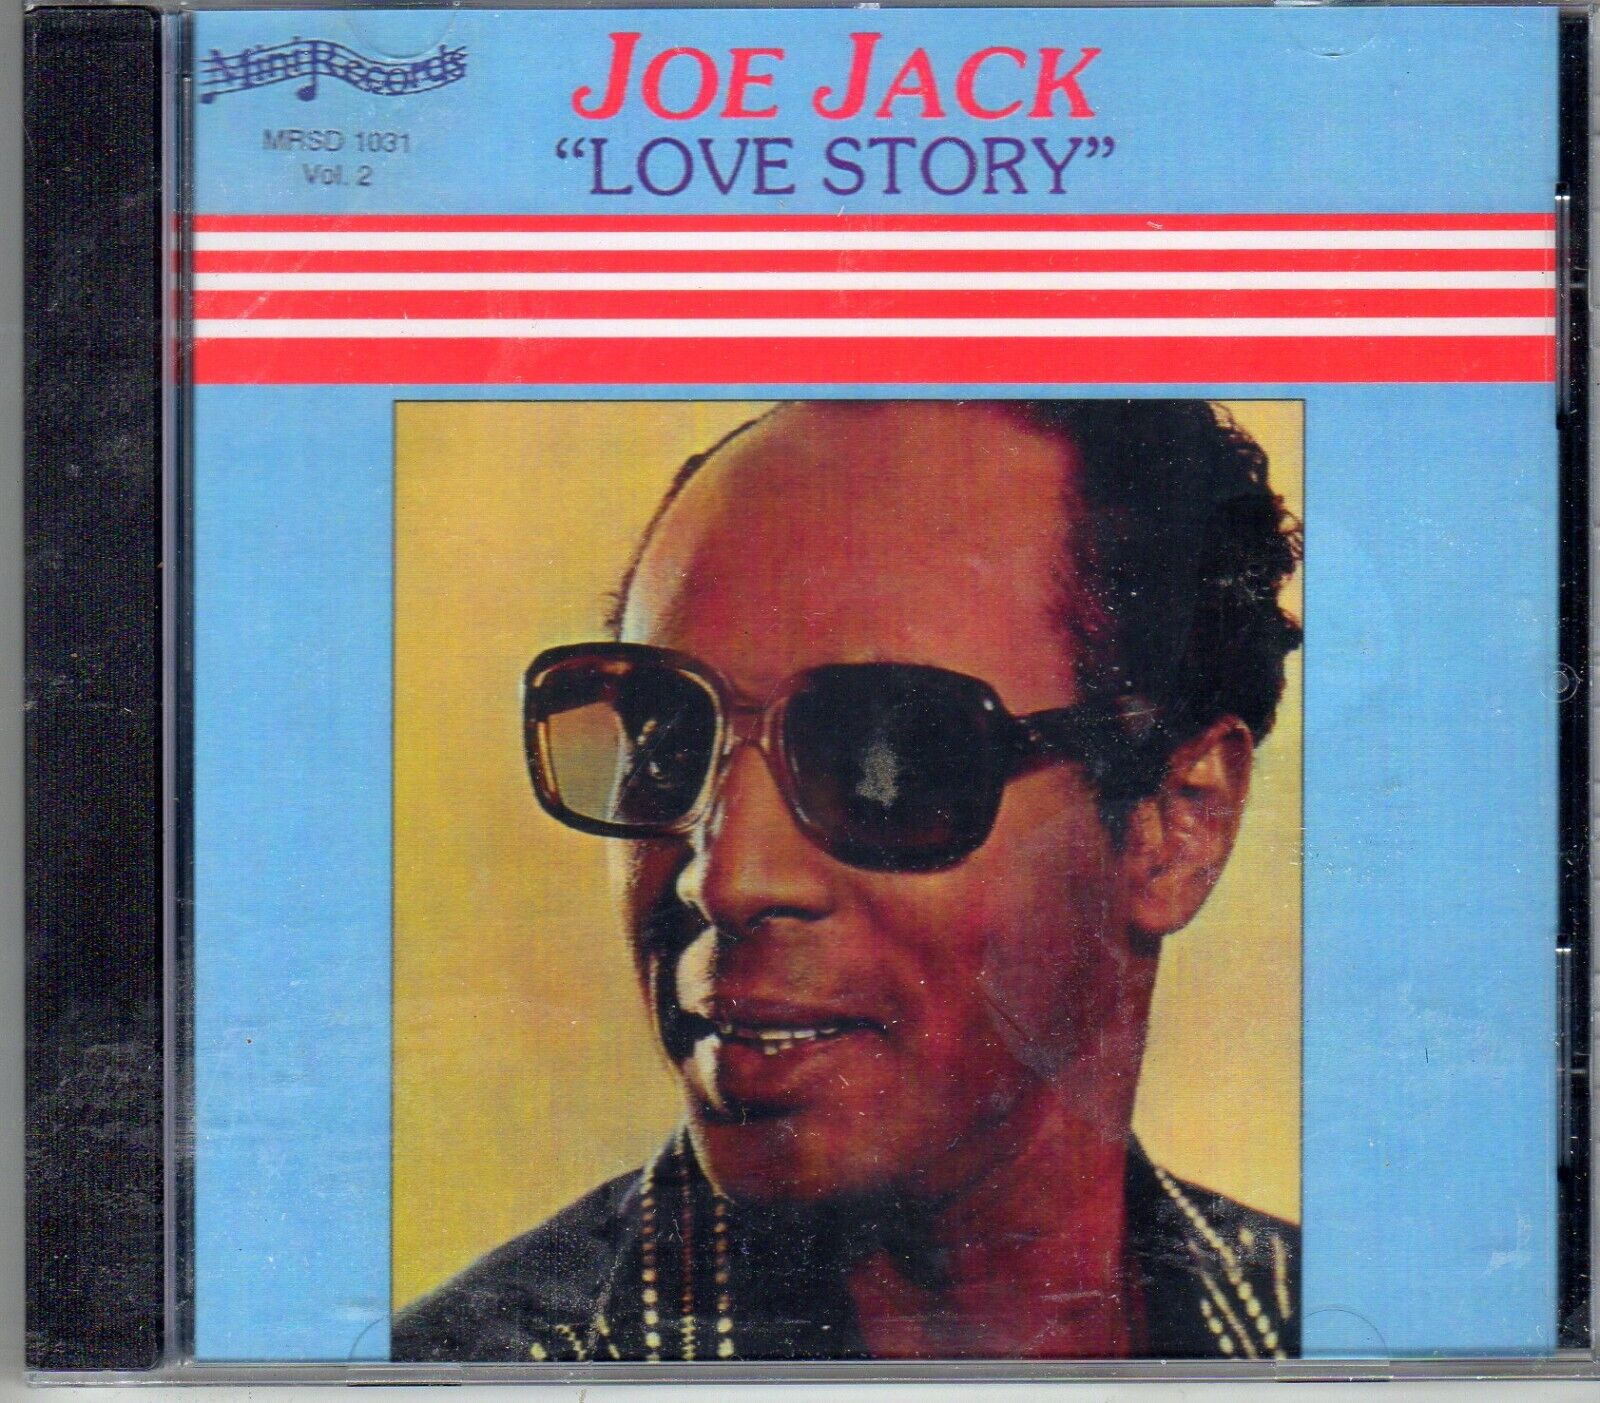 JOE  JACK  - LOVESTORY - Haitian CD bon Album klassik  konpa MUSIC ALBUM dousss